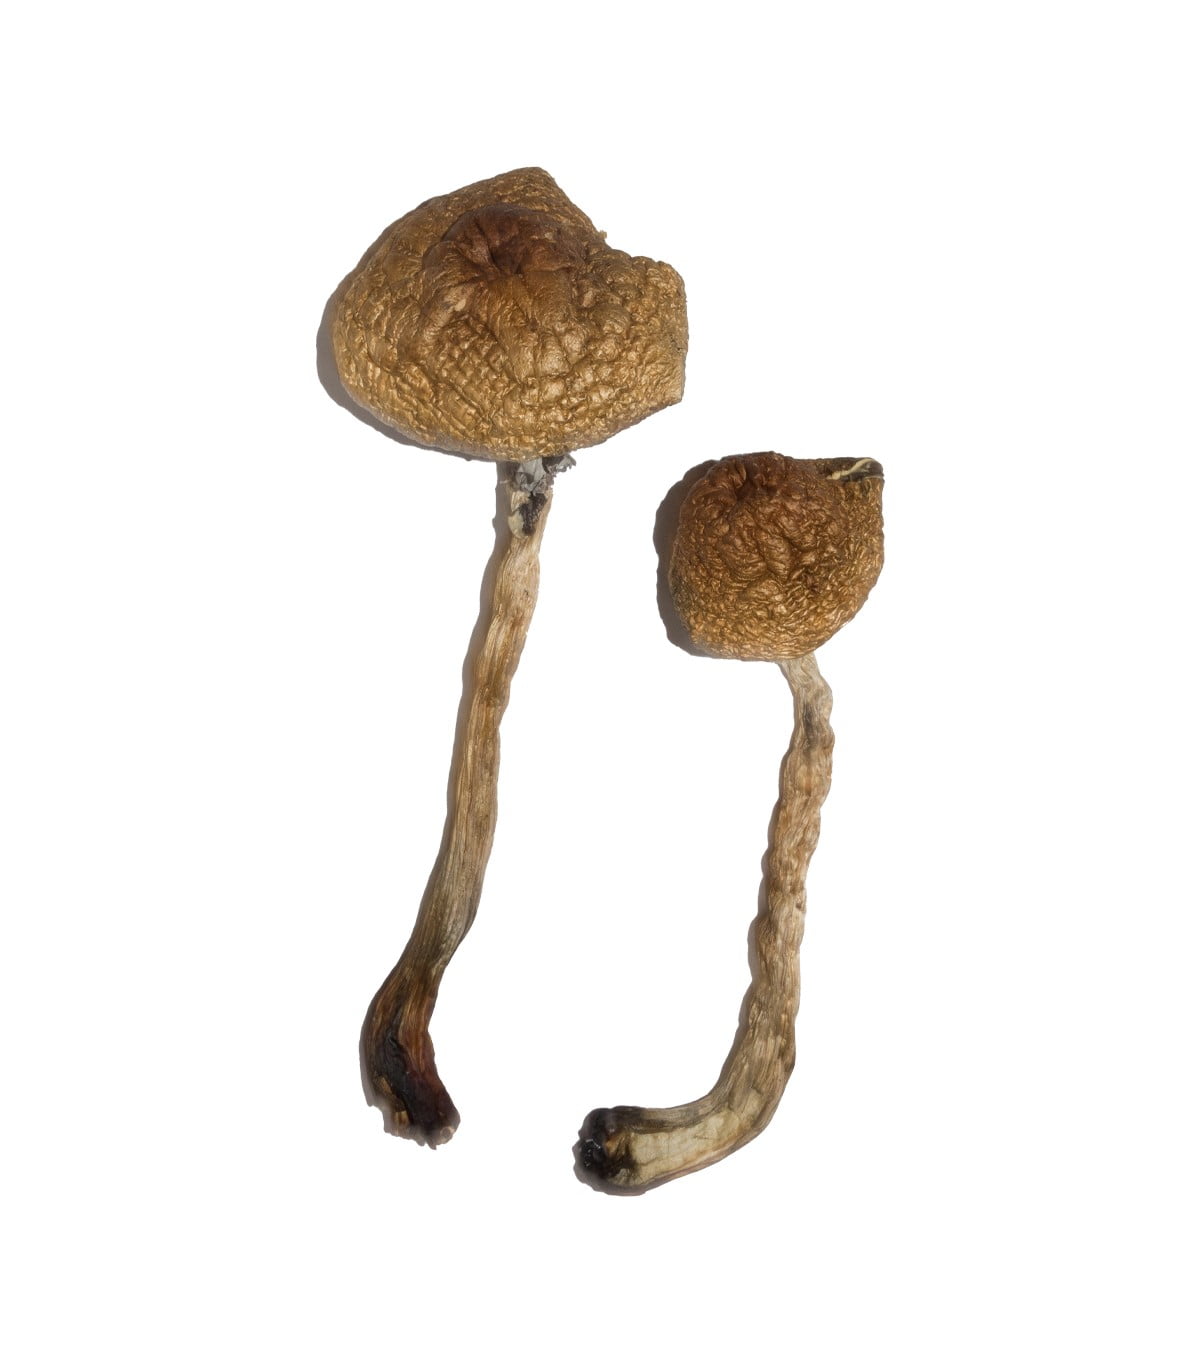 Buy Malabar Magic Mushrooms Online